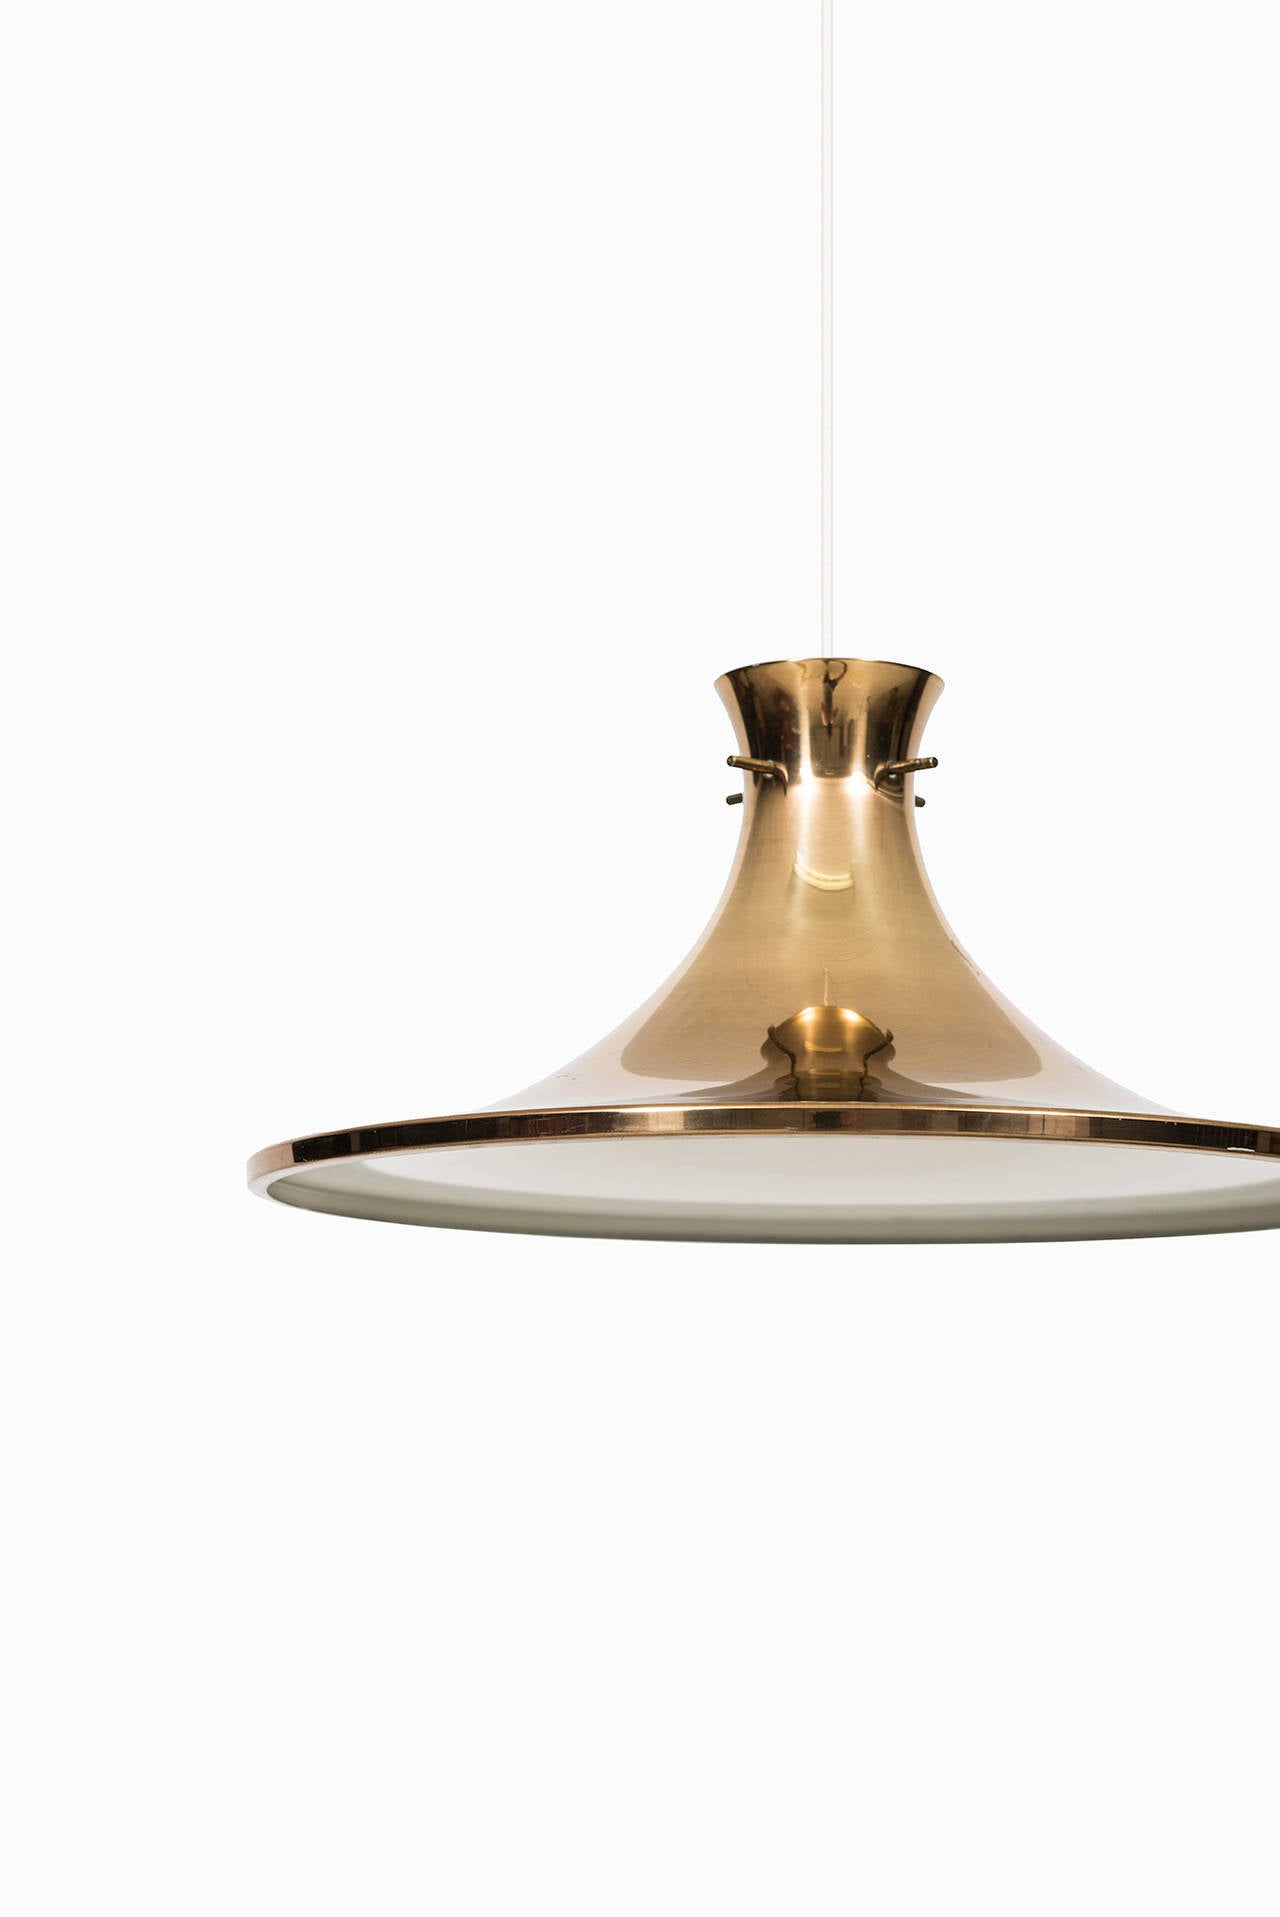 Ceiling lamp in brass designed by Hans-Agne Jakobsson. Produced by Hans-Agne Jakobsson in Markaryd, Sweden.